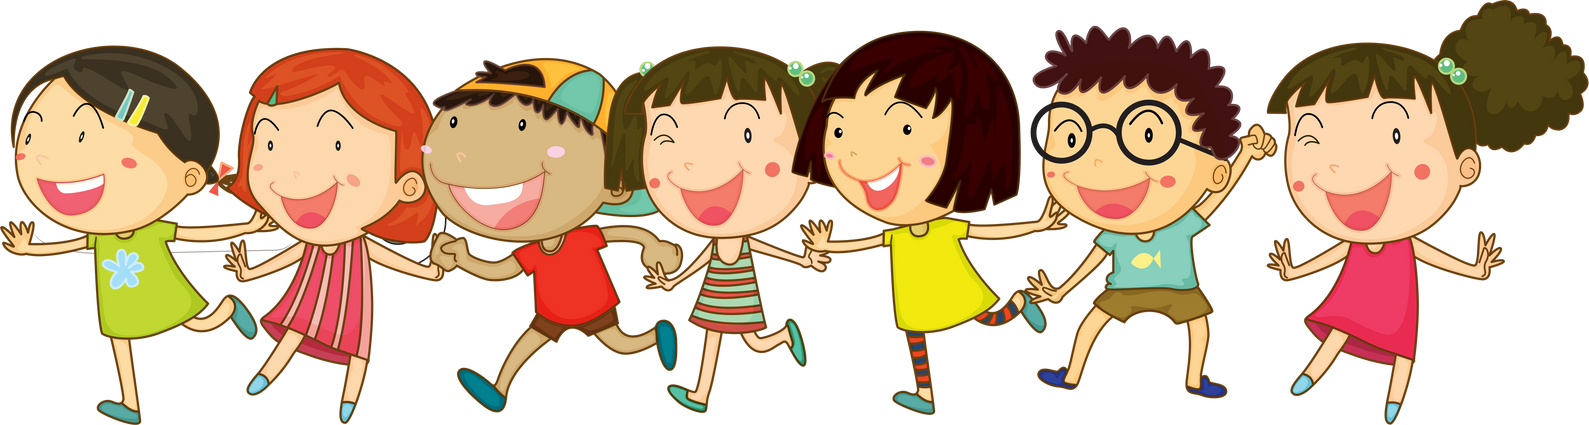 Happy Cute Children Cartoon Illustration